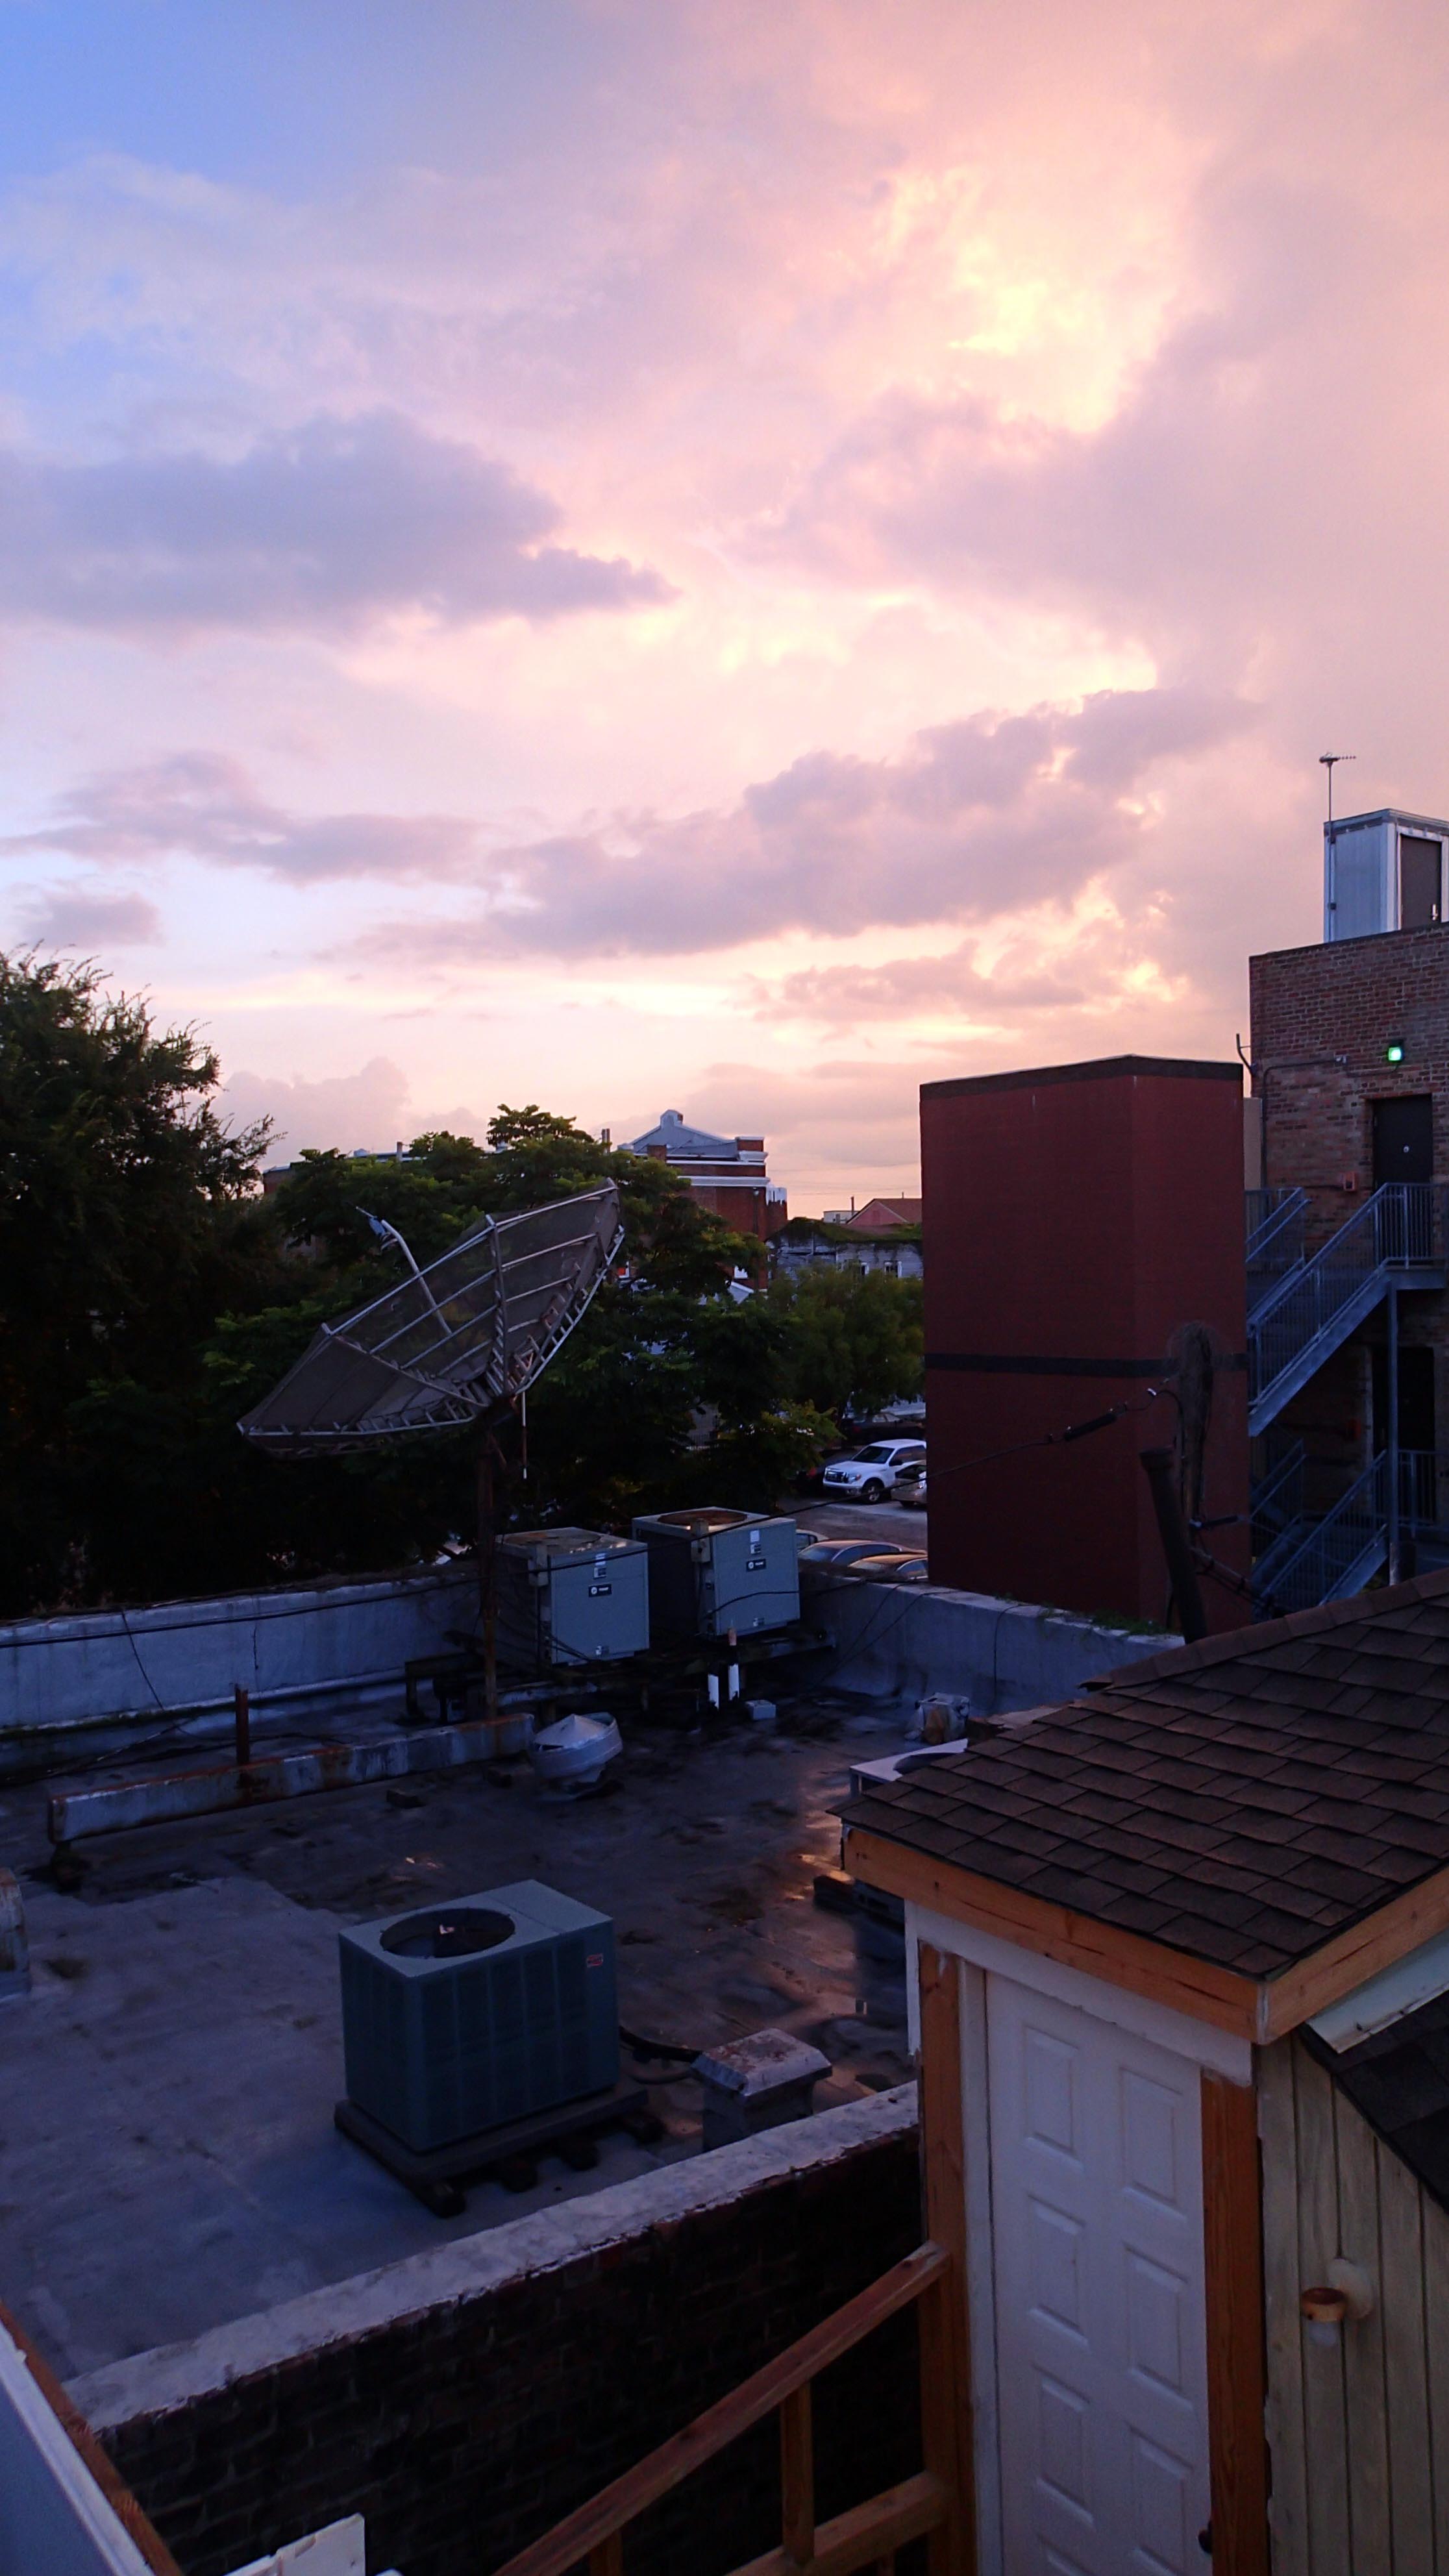 2014-8-8 sunset.jpg